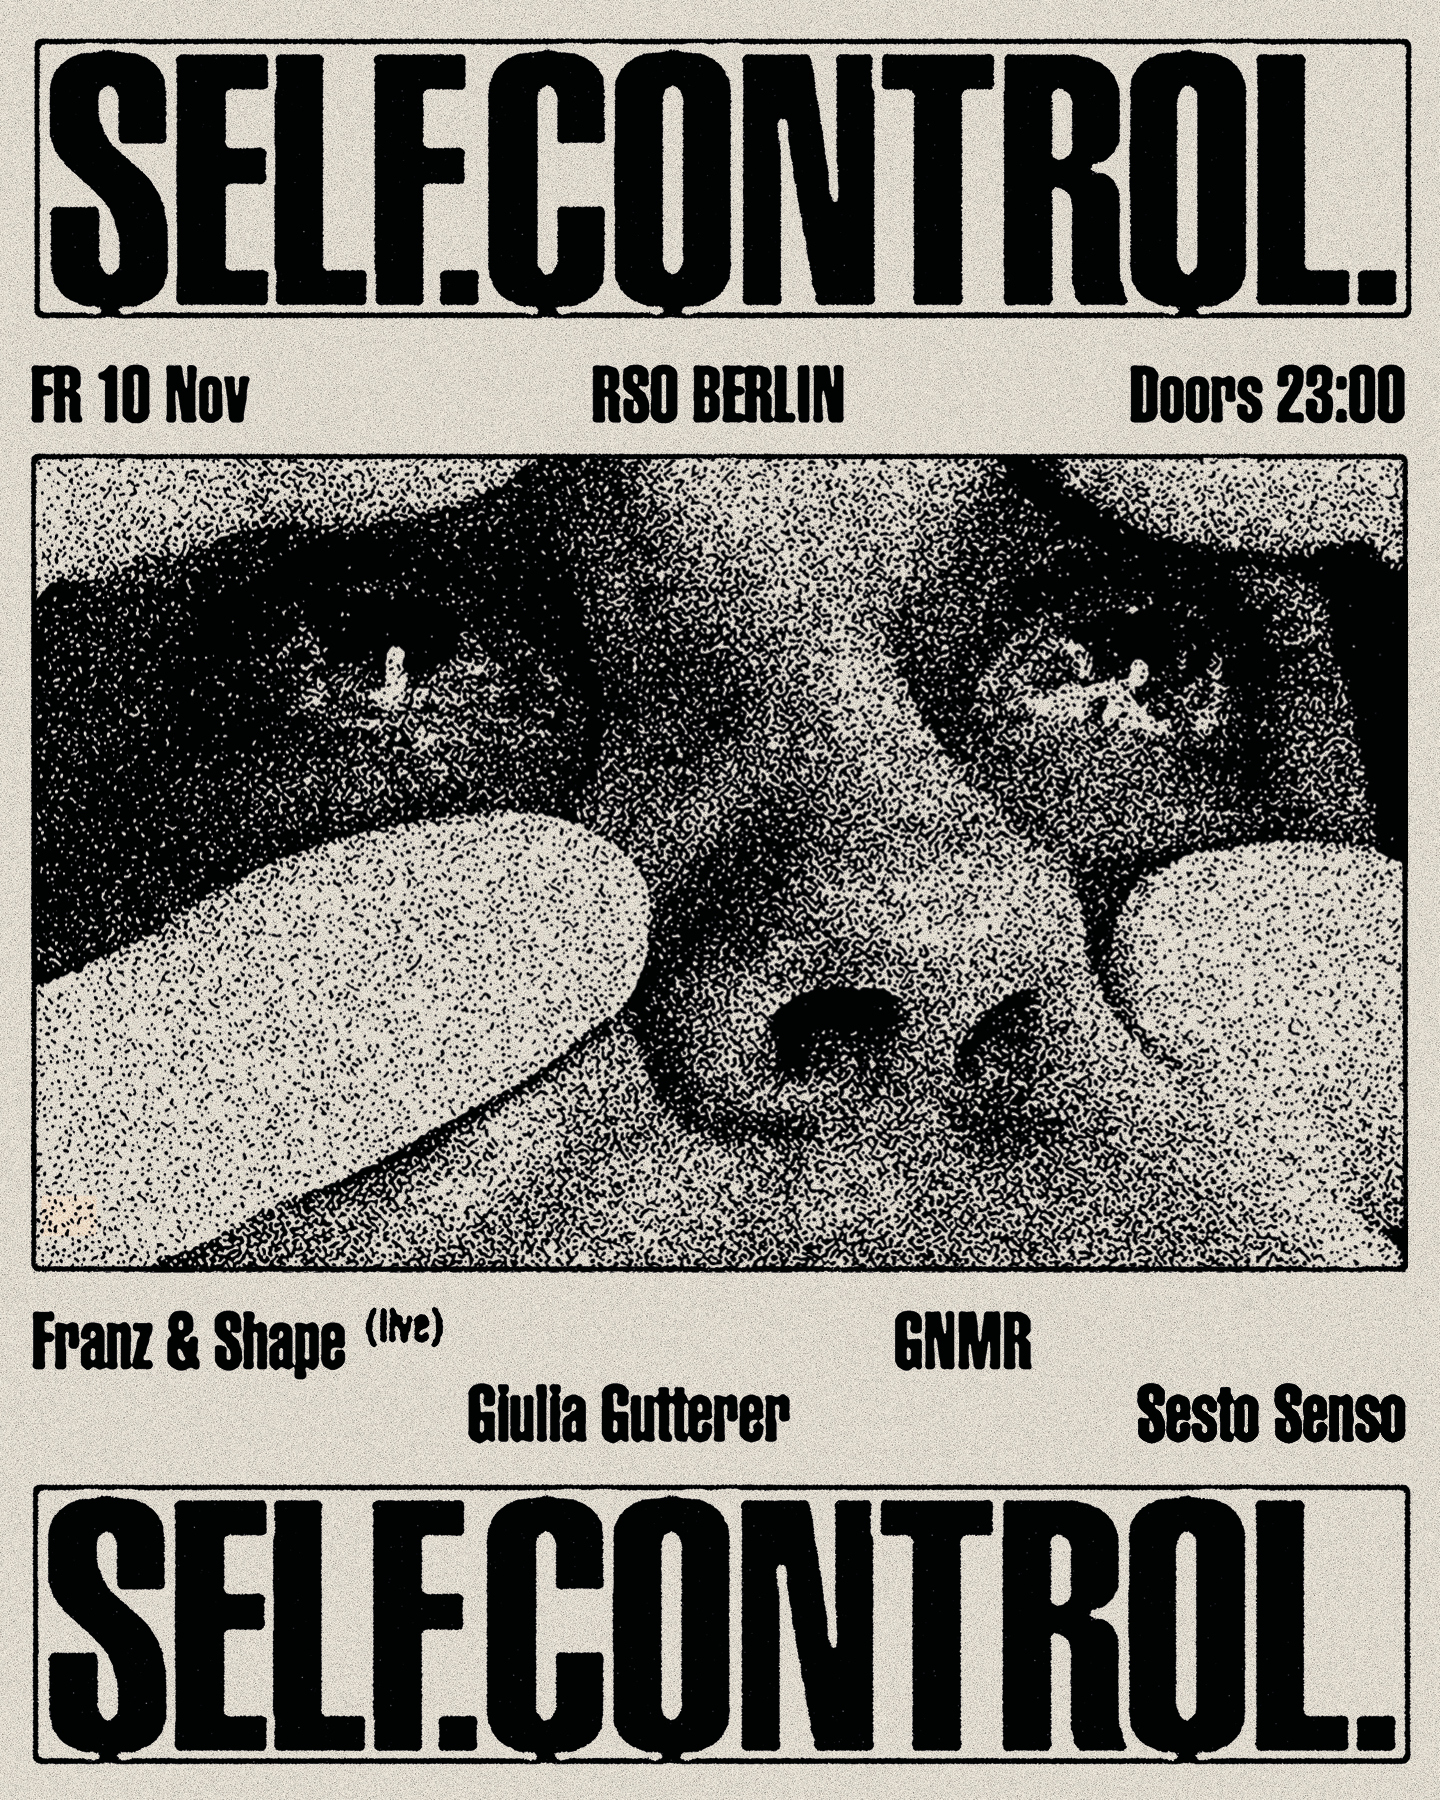 10.11.   Self. Control. with Franz & Shape, Giulia Gutterer, GNMR & Sesto Senso